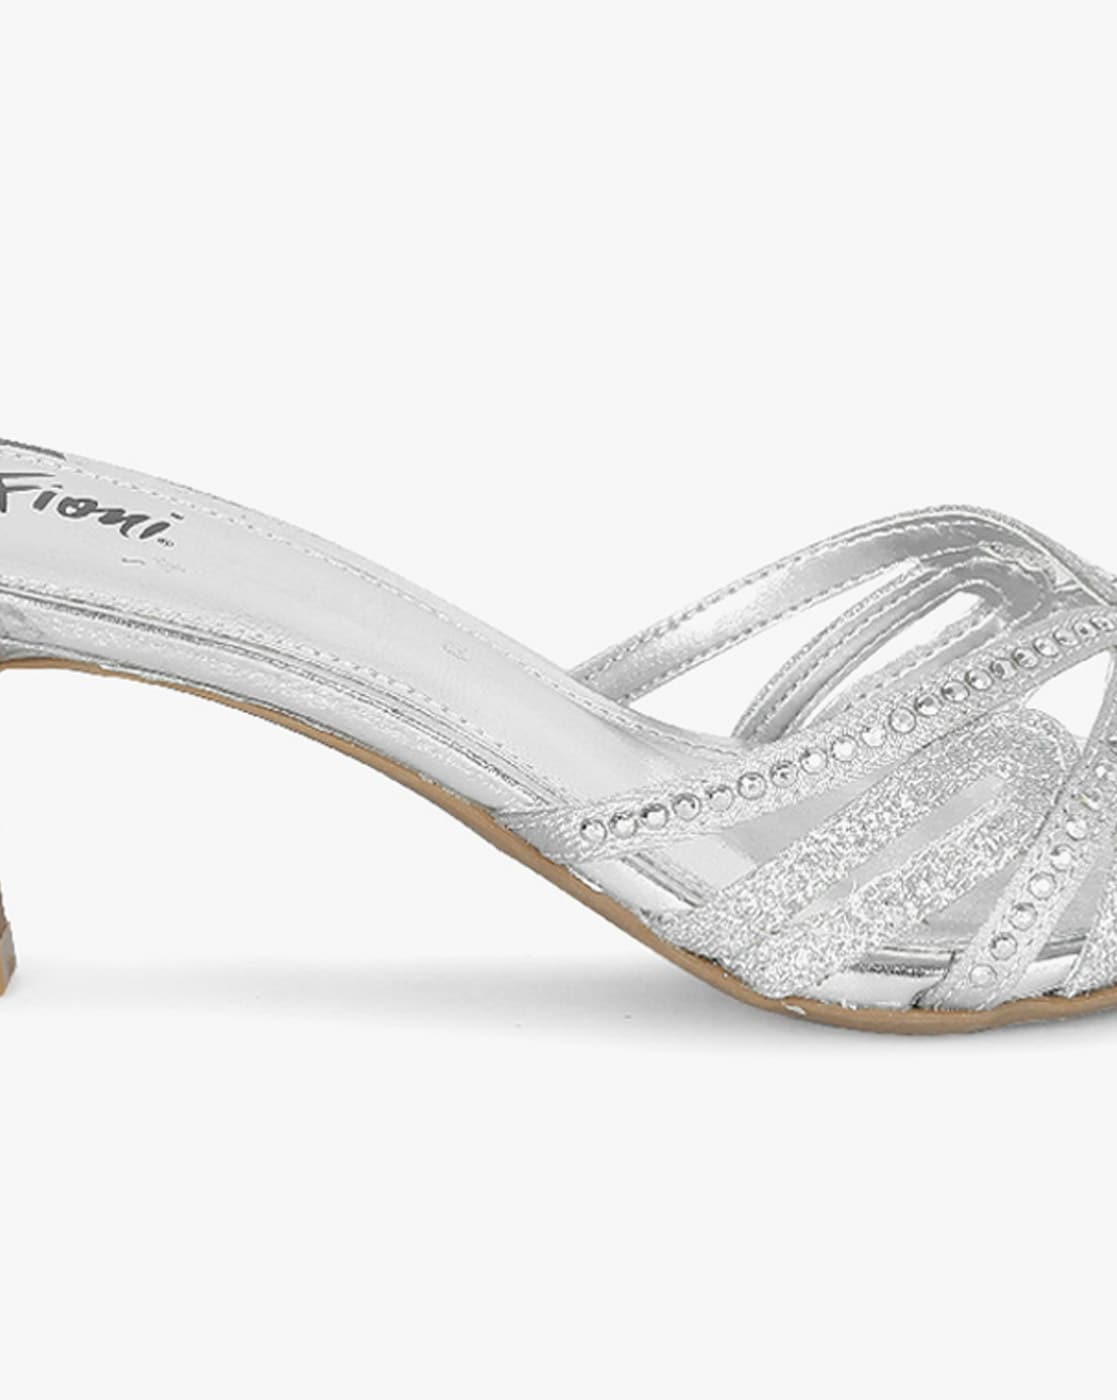 LAKESHI Summer Women Pumps Small Heels Wedding Shoes Gold Silver Stiletto  High Heels Peep Toe Women Heel Sandals Ladies Shoes